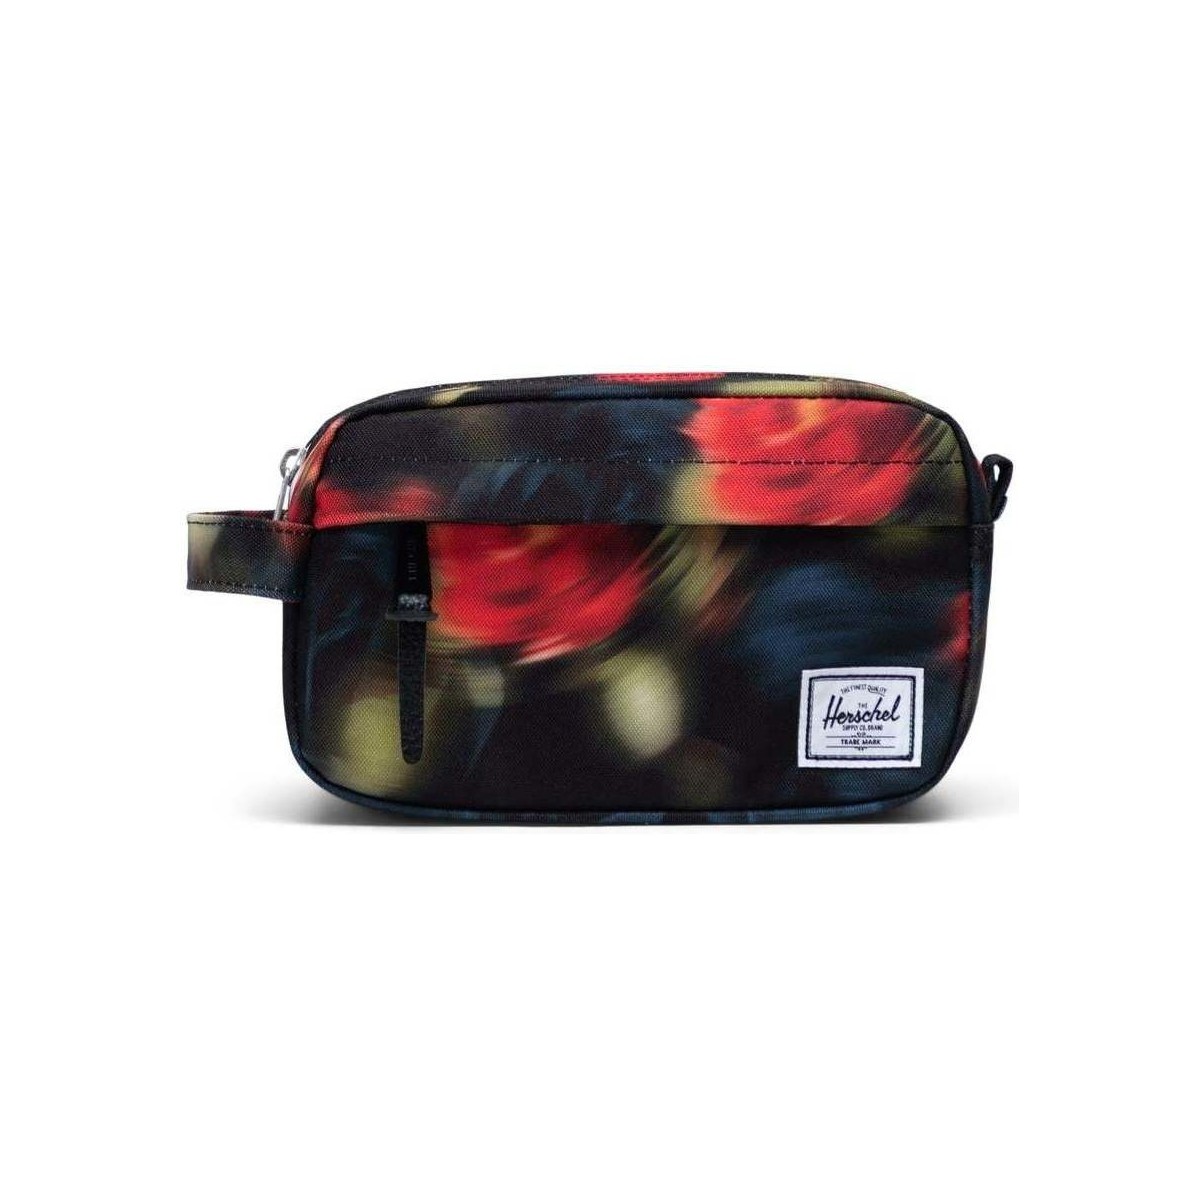 Taschen Beautycase Herschel Chapter Carry On Blurry Roses Multicolor